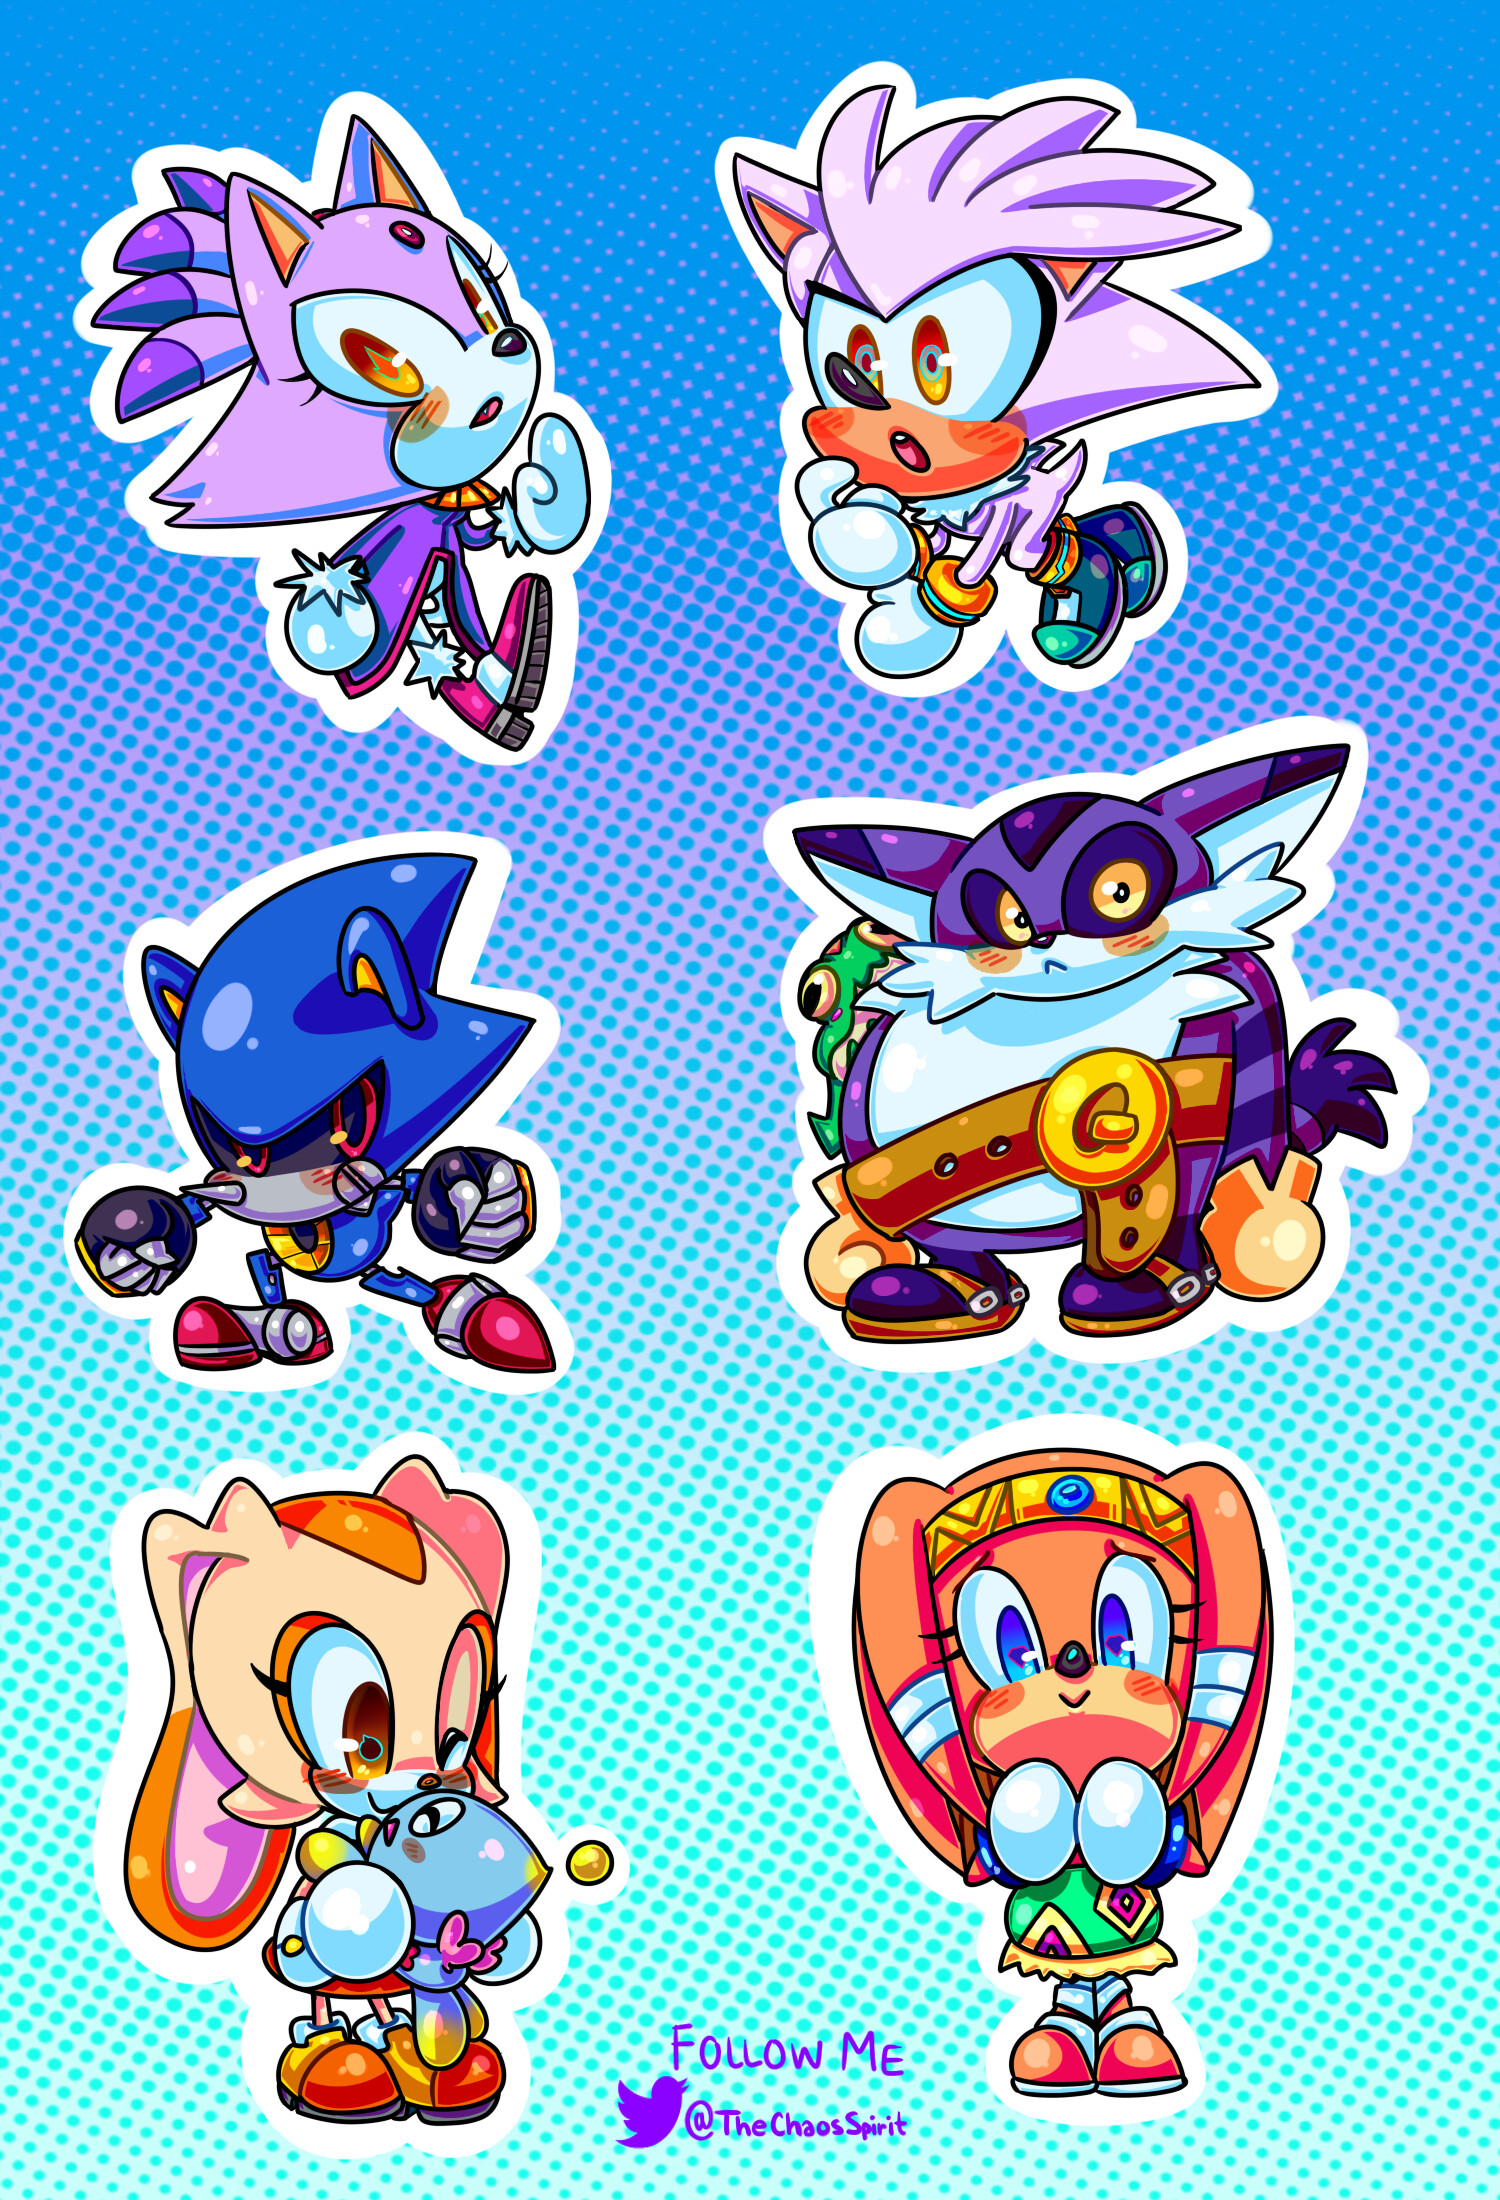 TheChaosSpirit - Sonic the hedgehog stickers, set 2